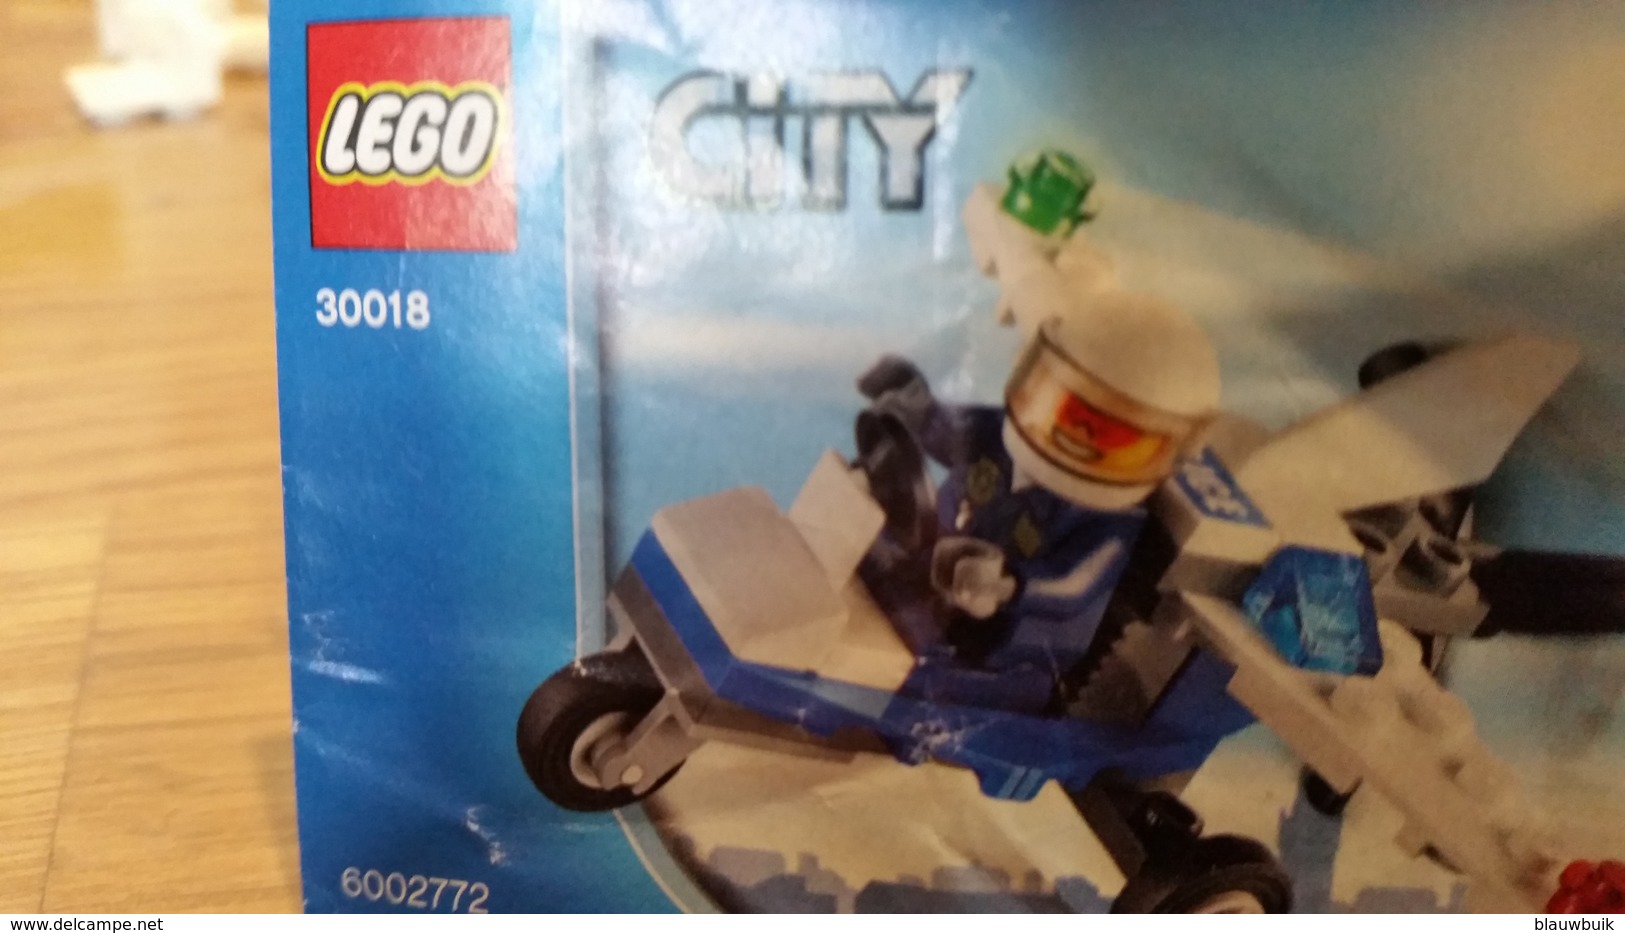 LEGO City 30018 Politie Microlight - Figurines